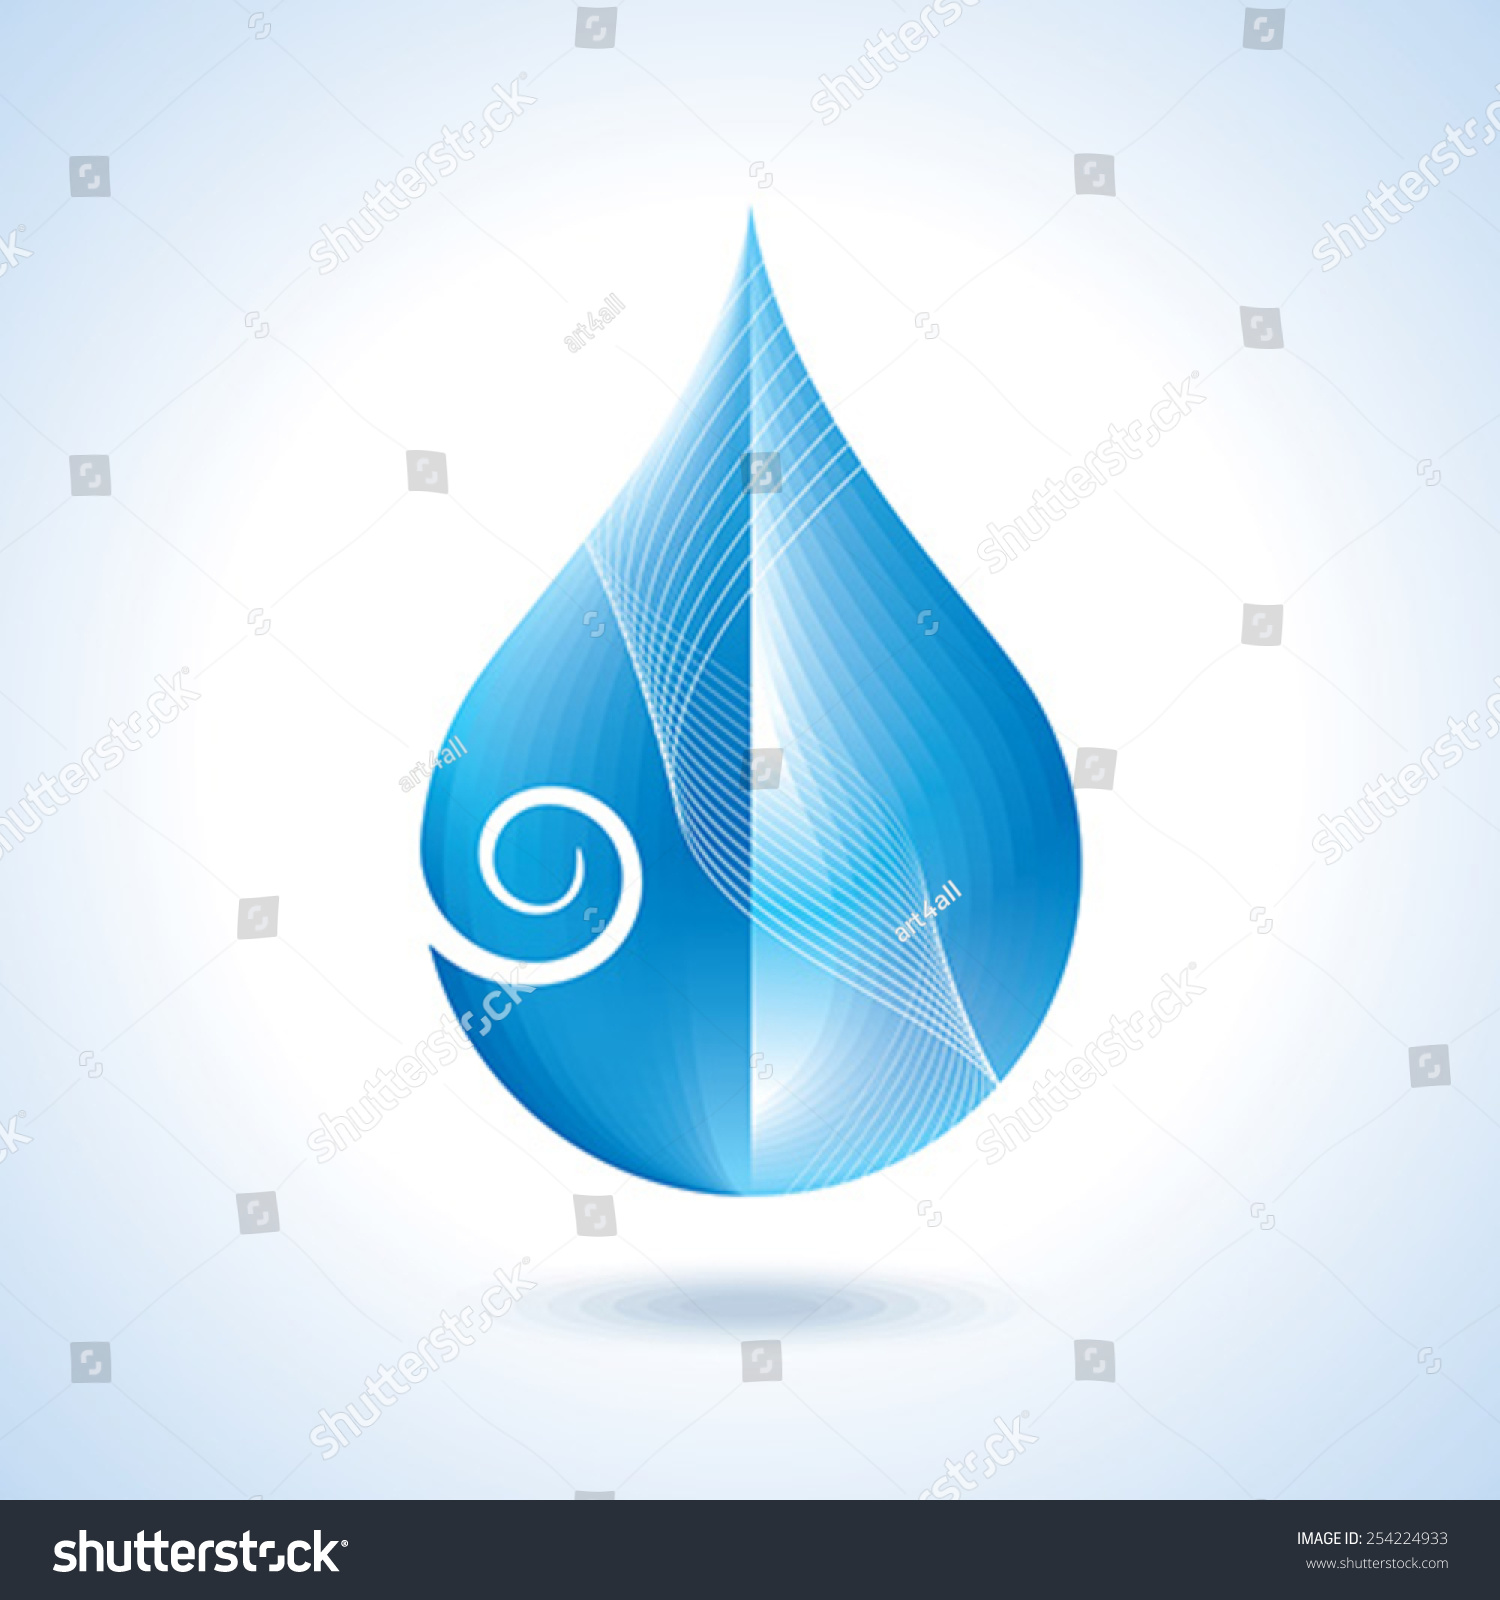 Blue Shiny Water Drop Vector Illustration Stock Vector 254224933 ...